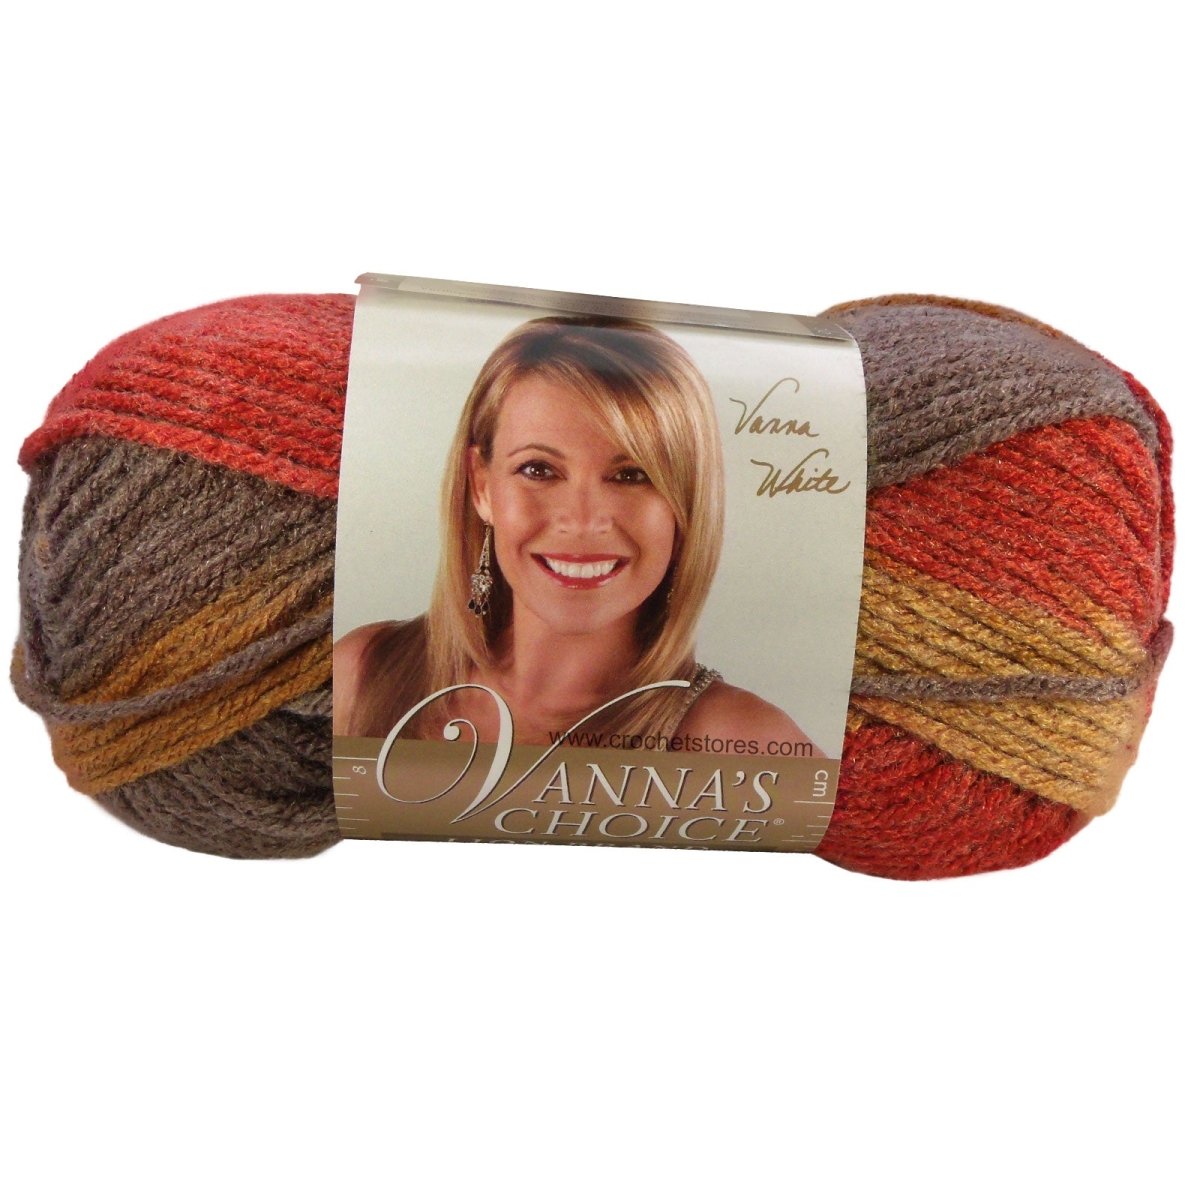 VANNAS CHOICE - Crochetstores